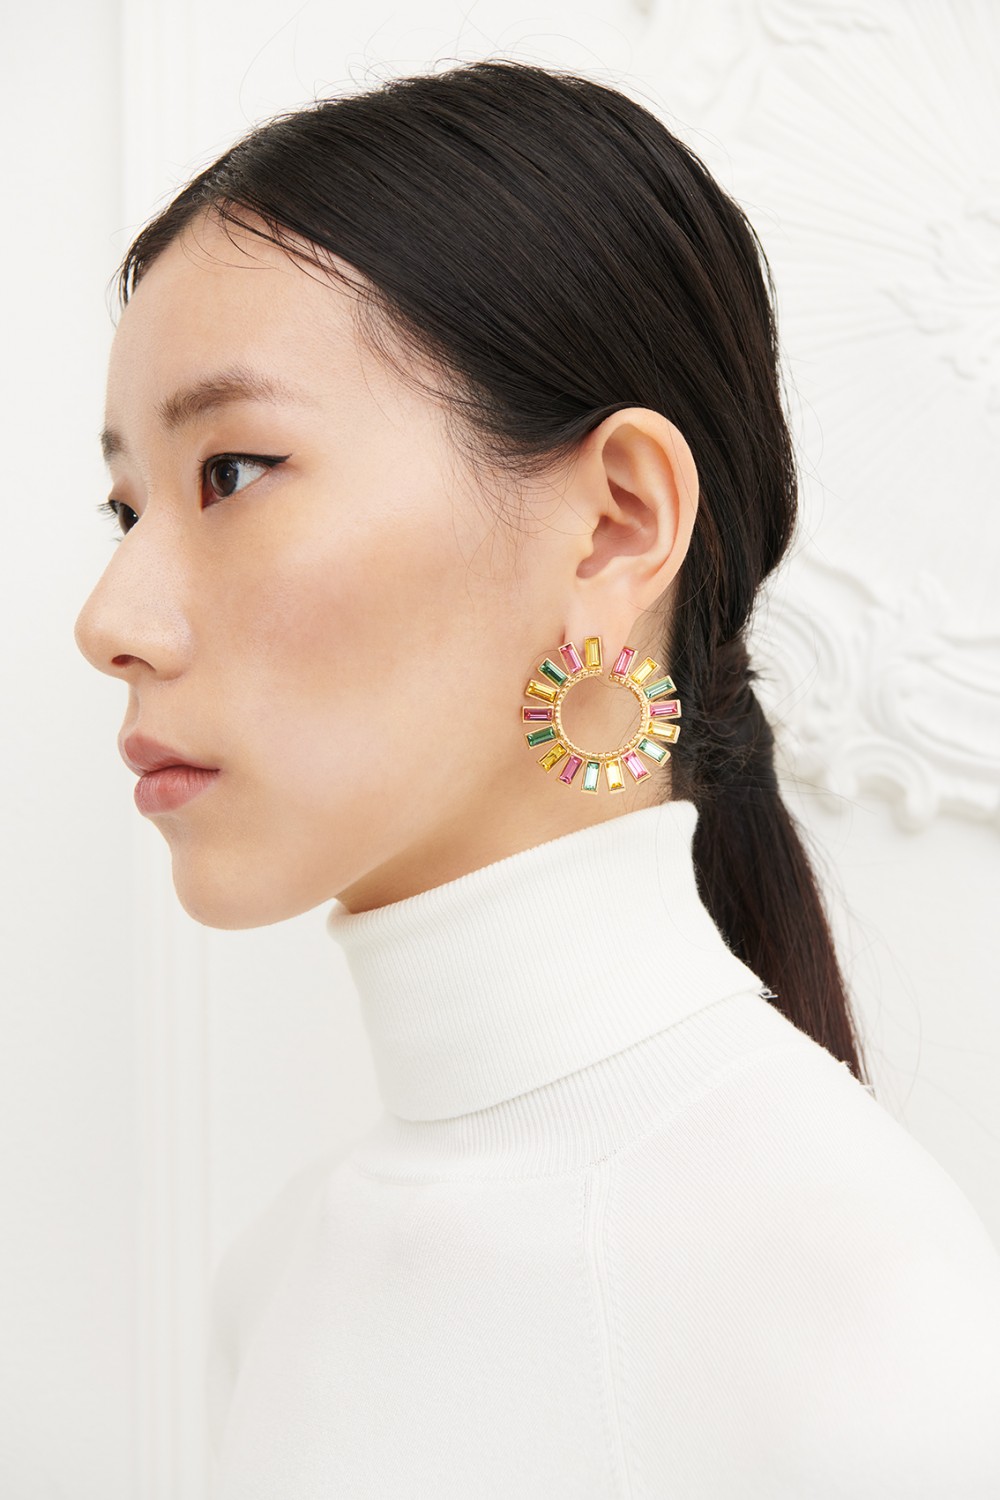 Multi-colored earrings